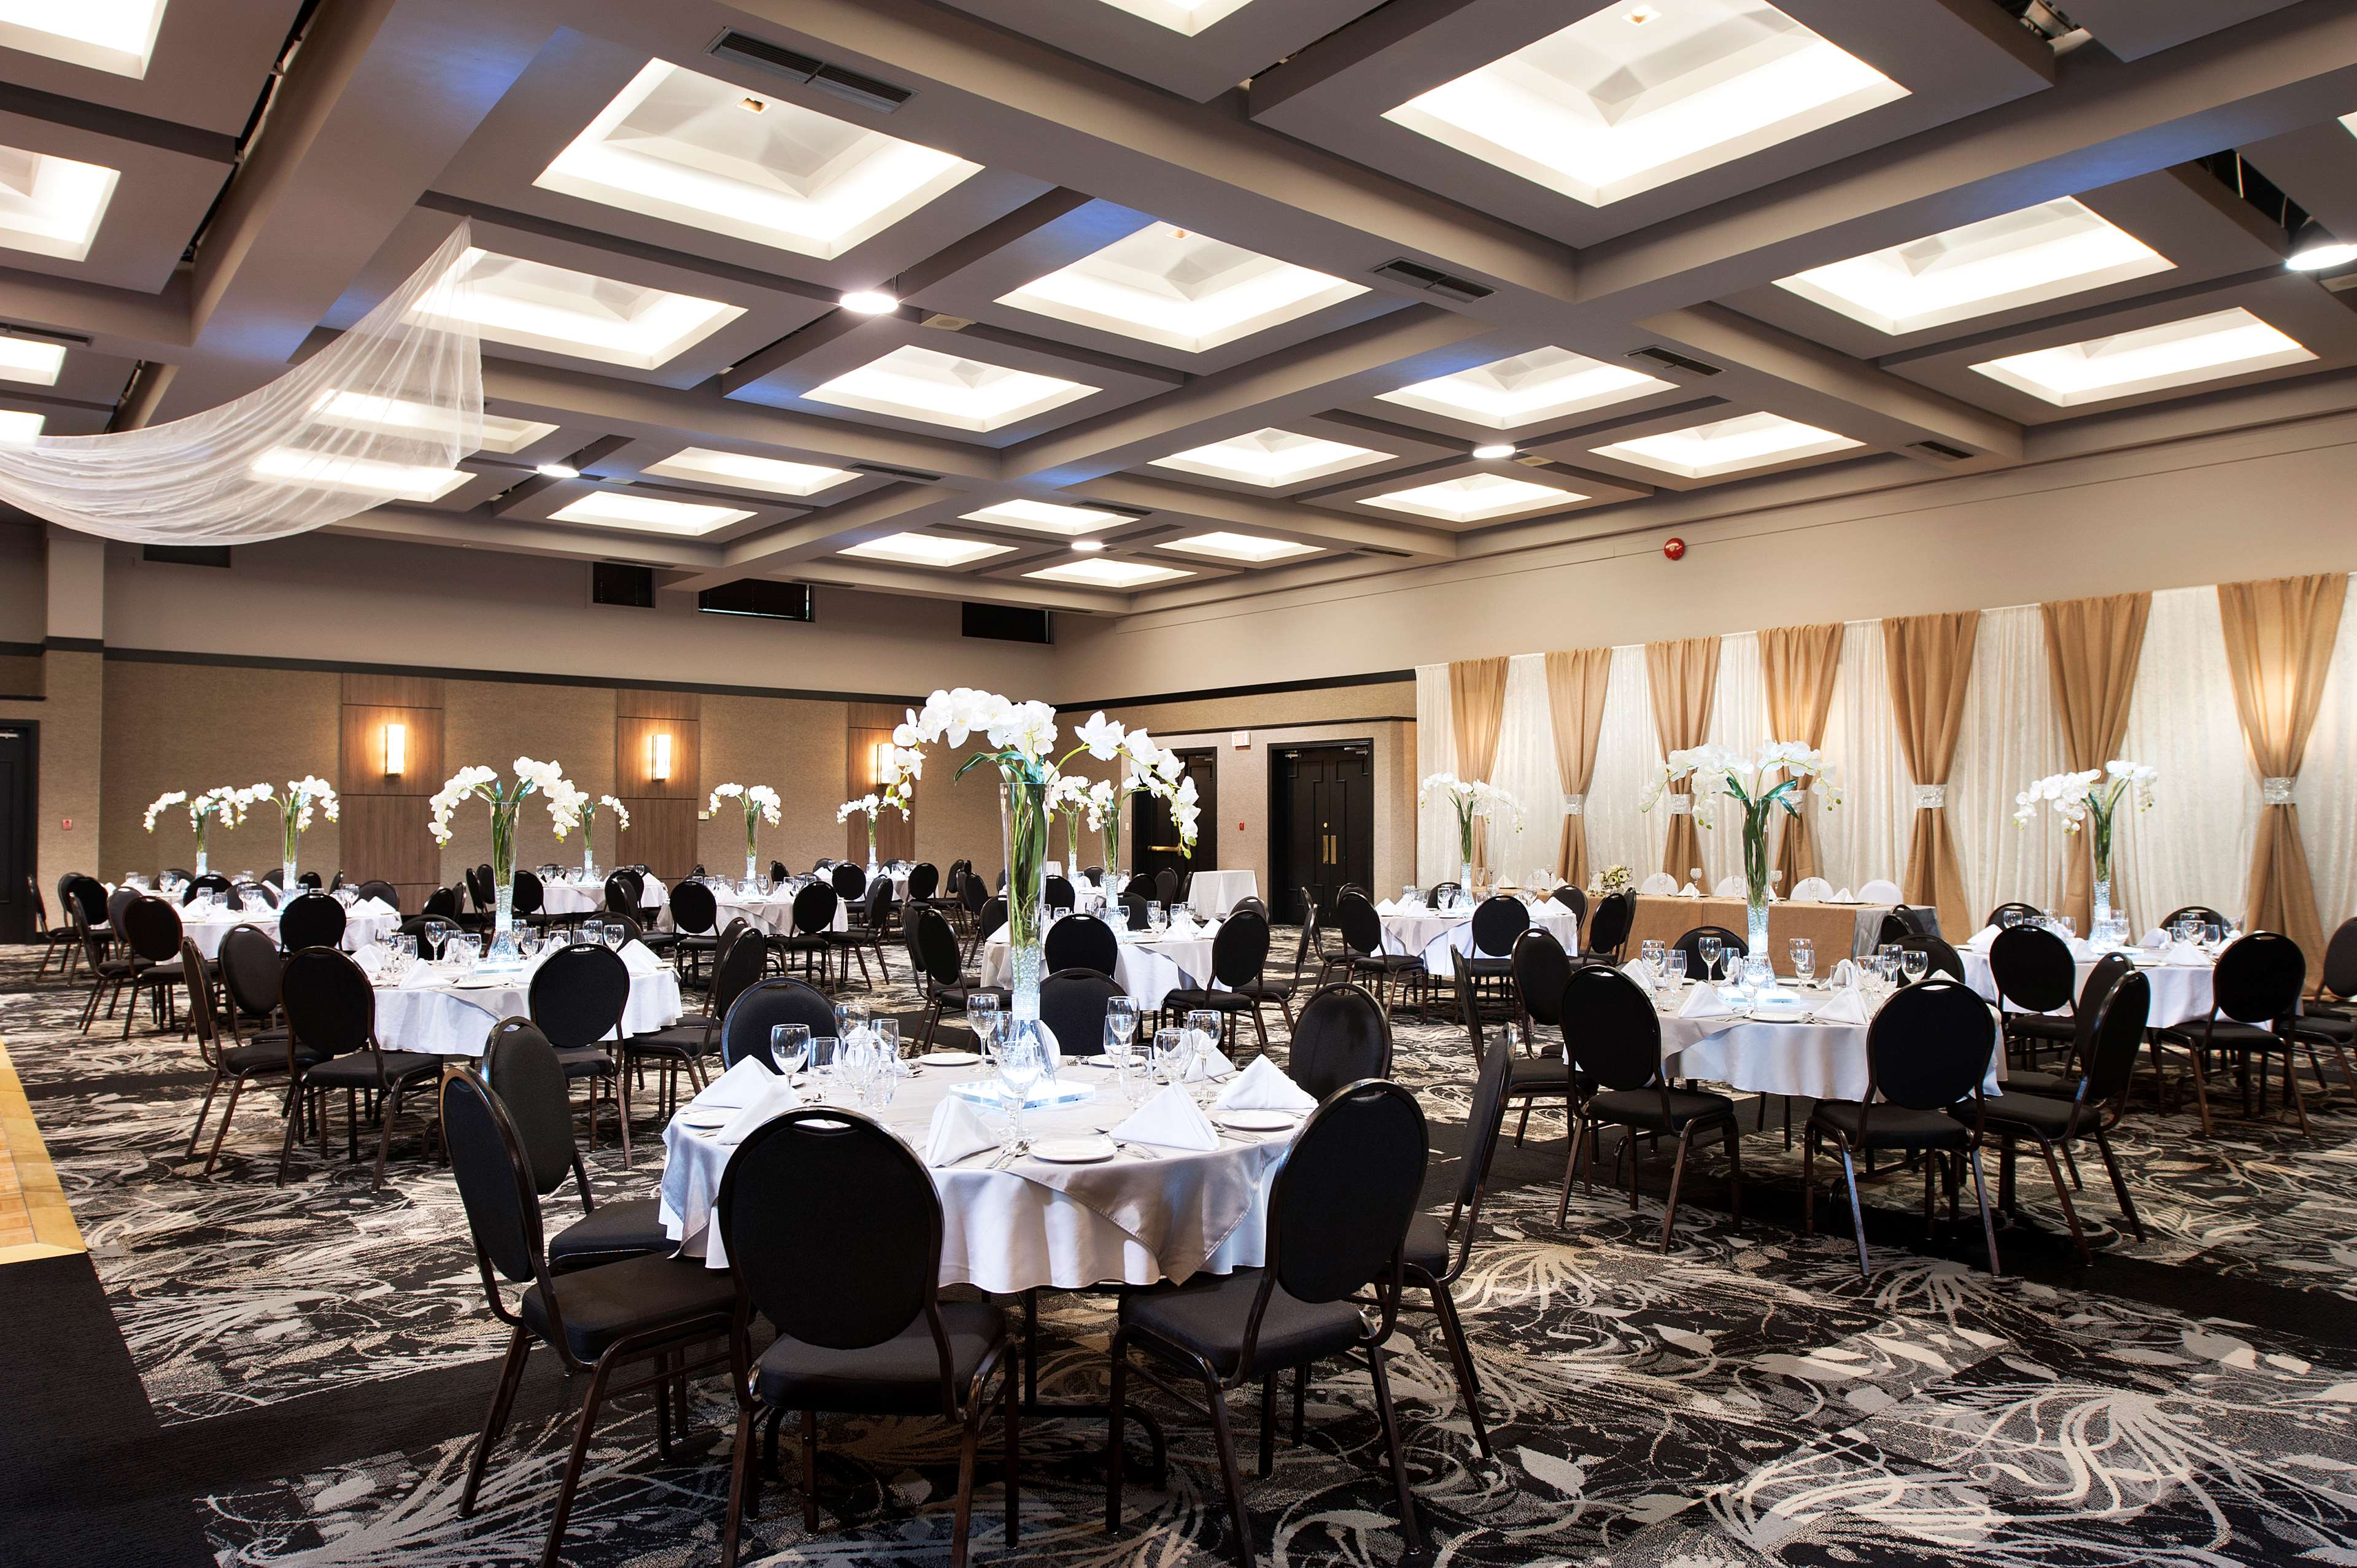 Banquet Room Best Western Hotel Universel Drummondville Drummondville (819)478-4971